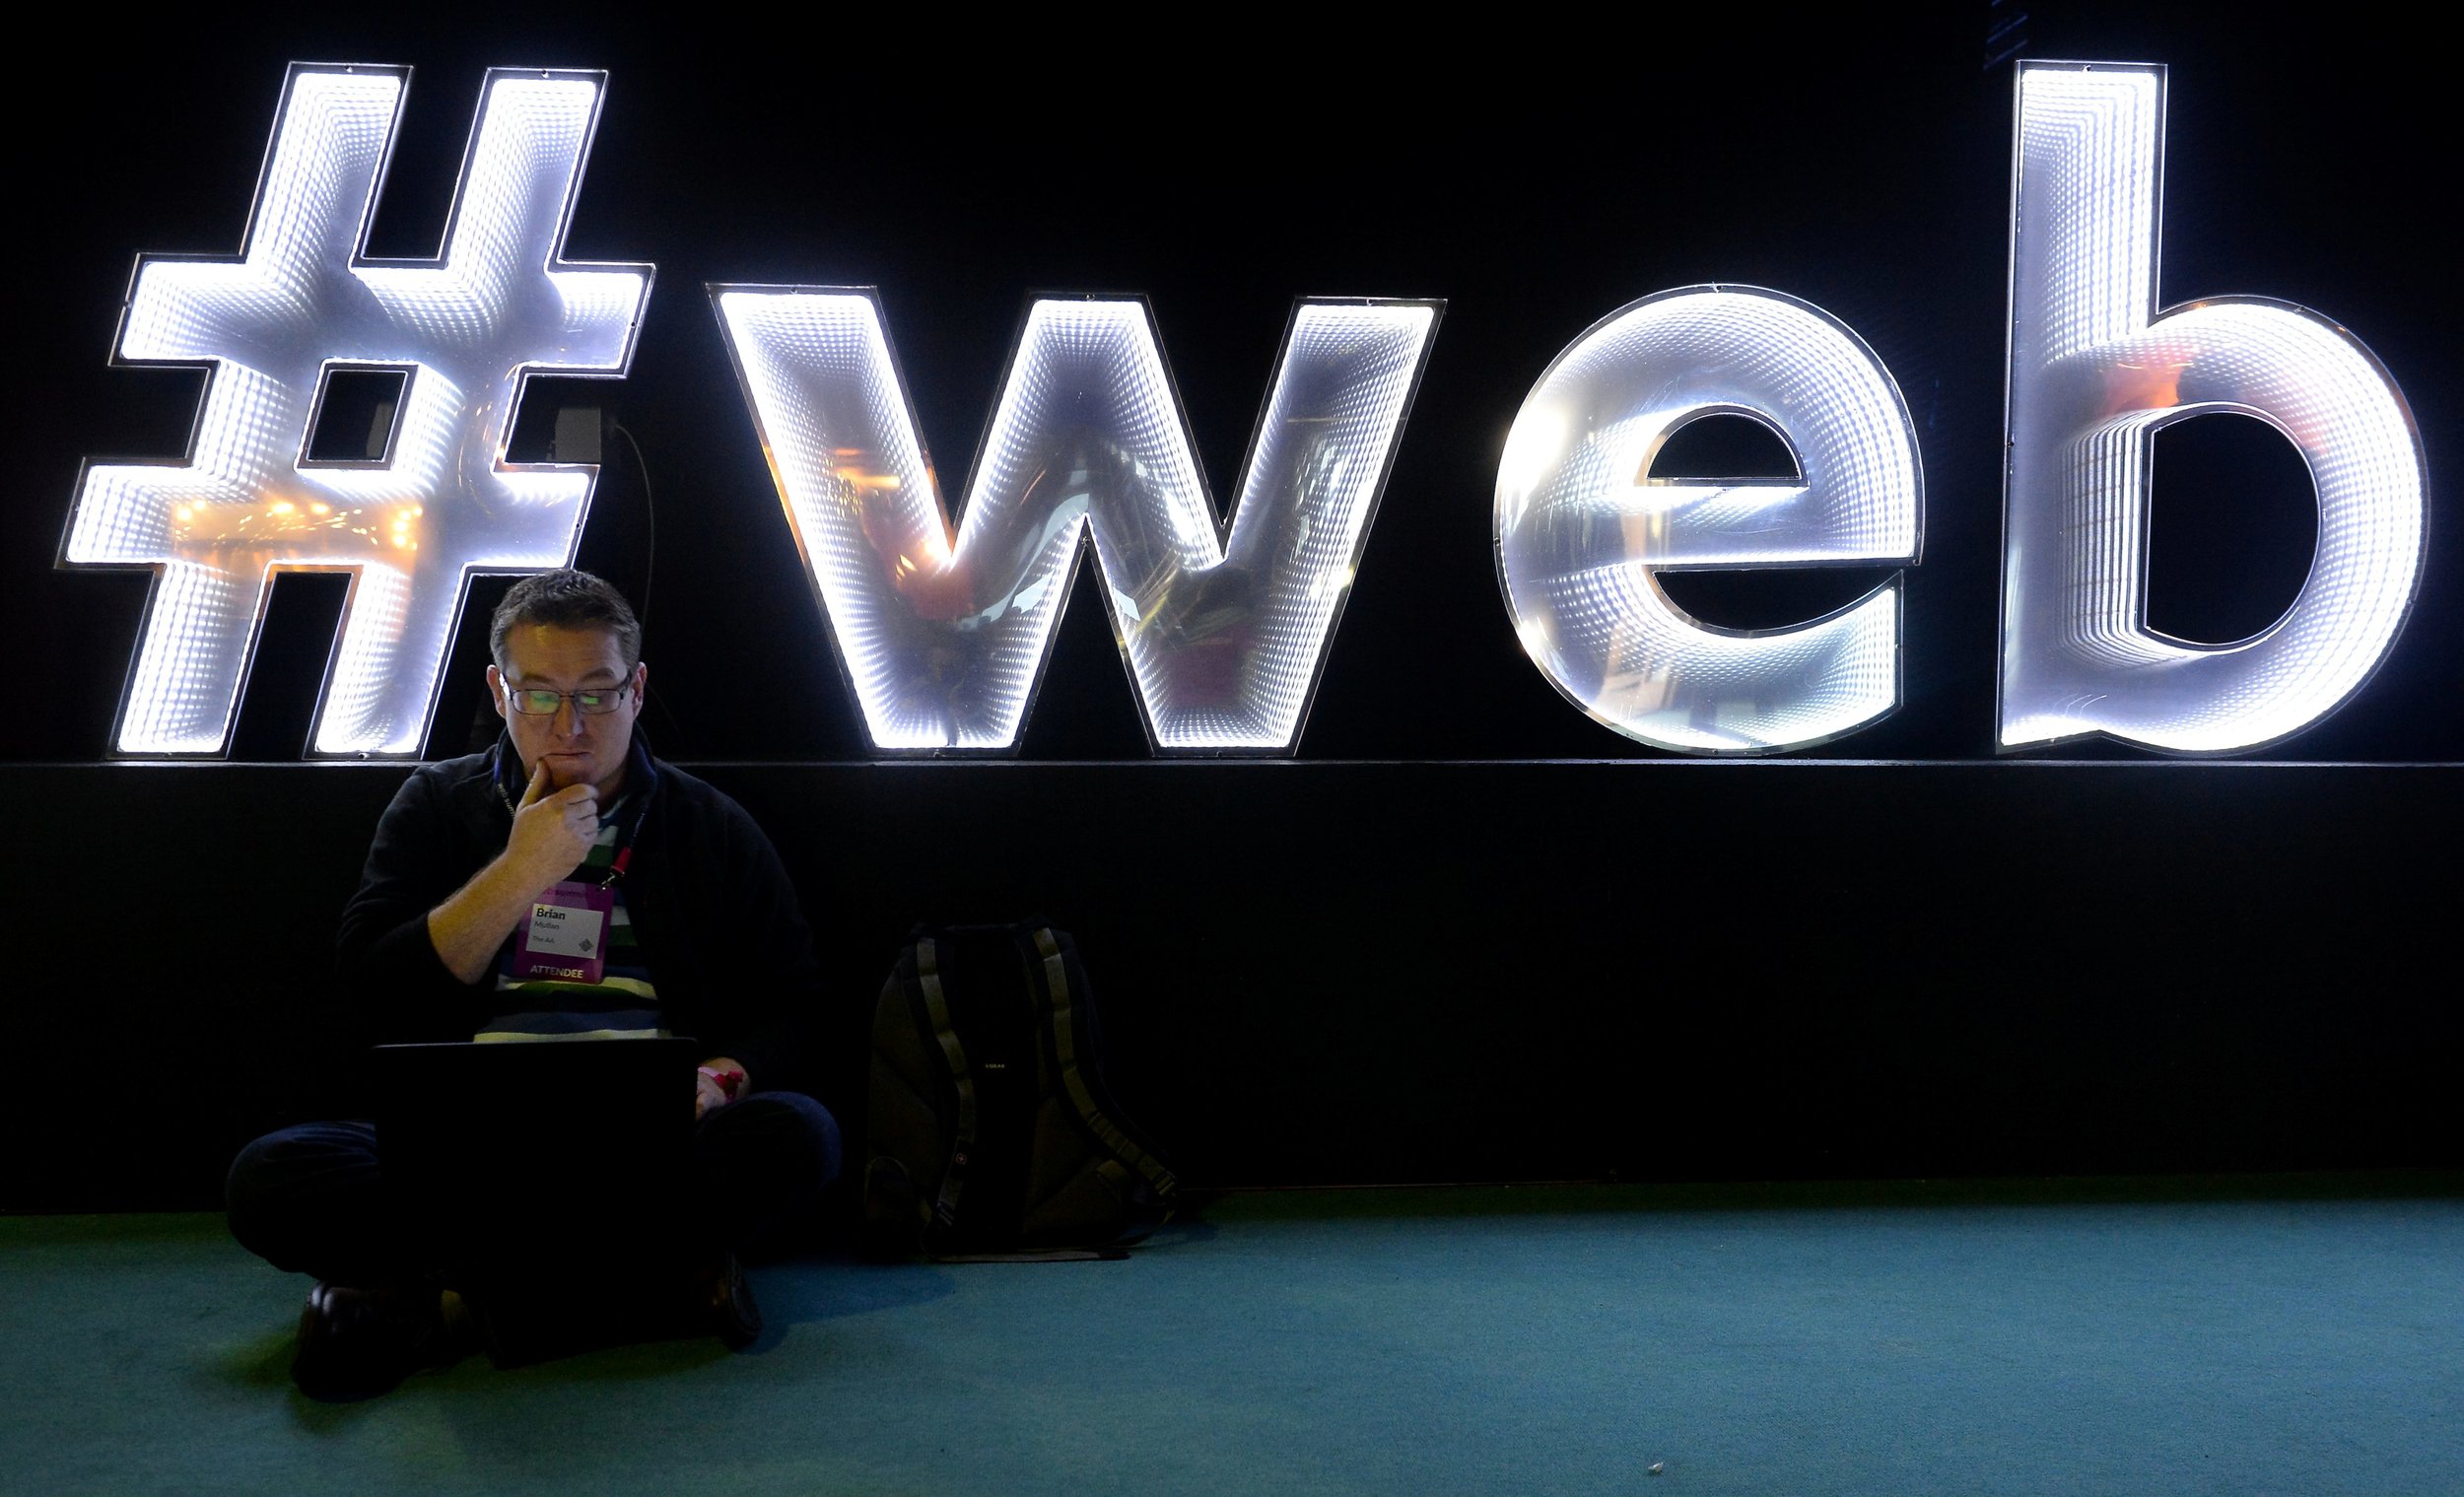  Web Summit 2015 Dublin, Ireland /  Web Summit / Sportsfile  